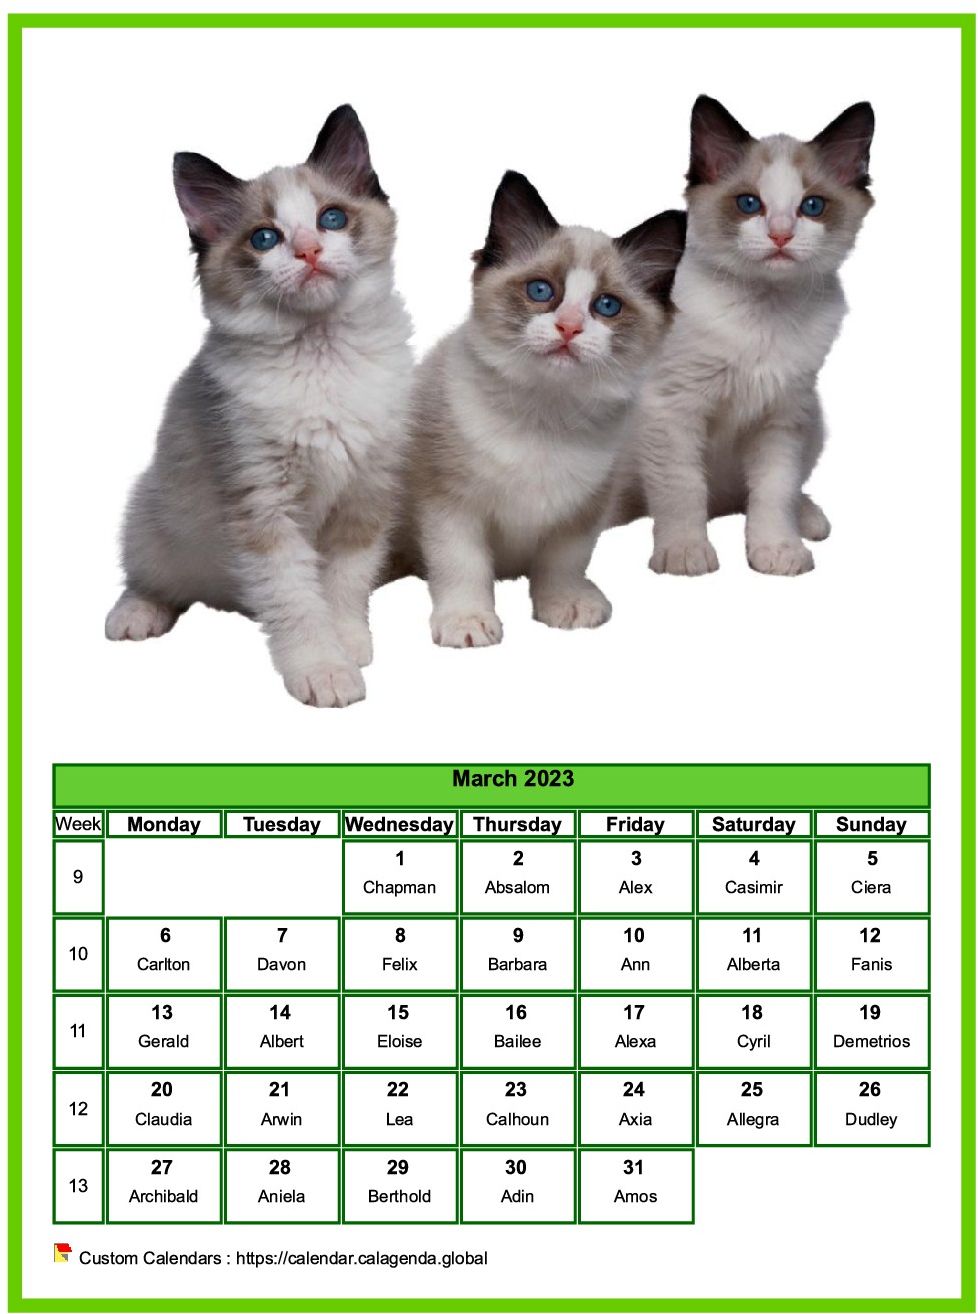 Calendar March 2023 cats